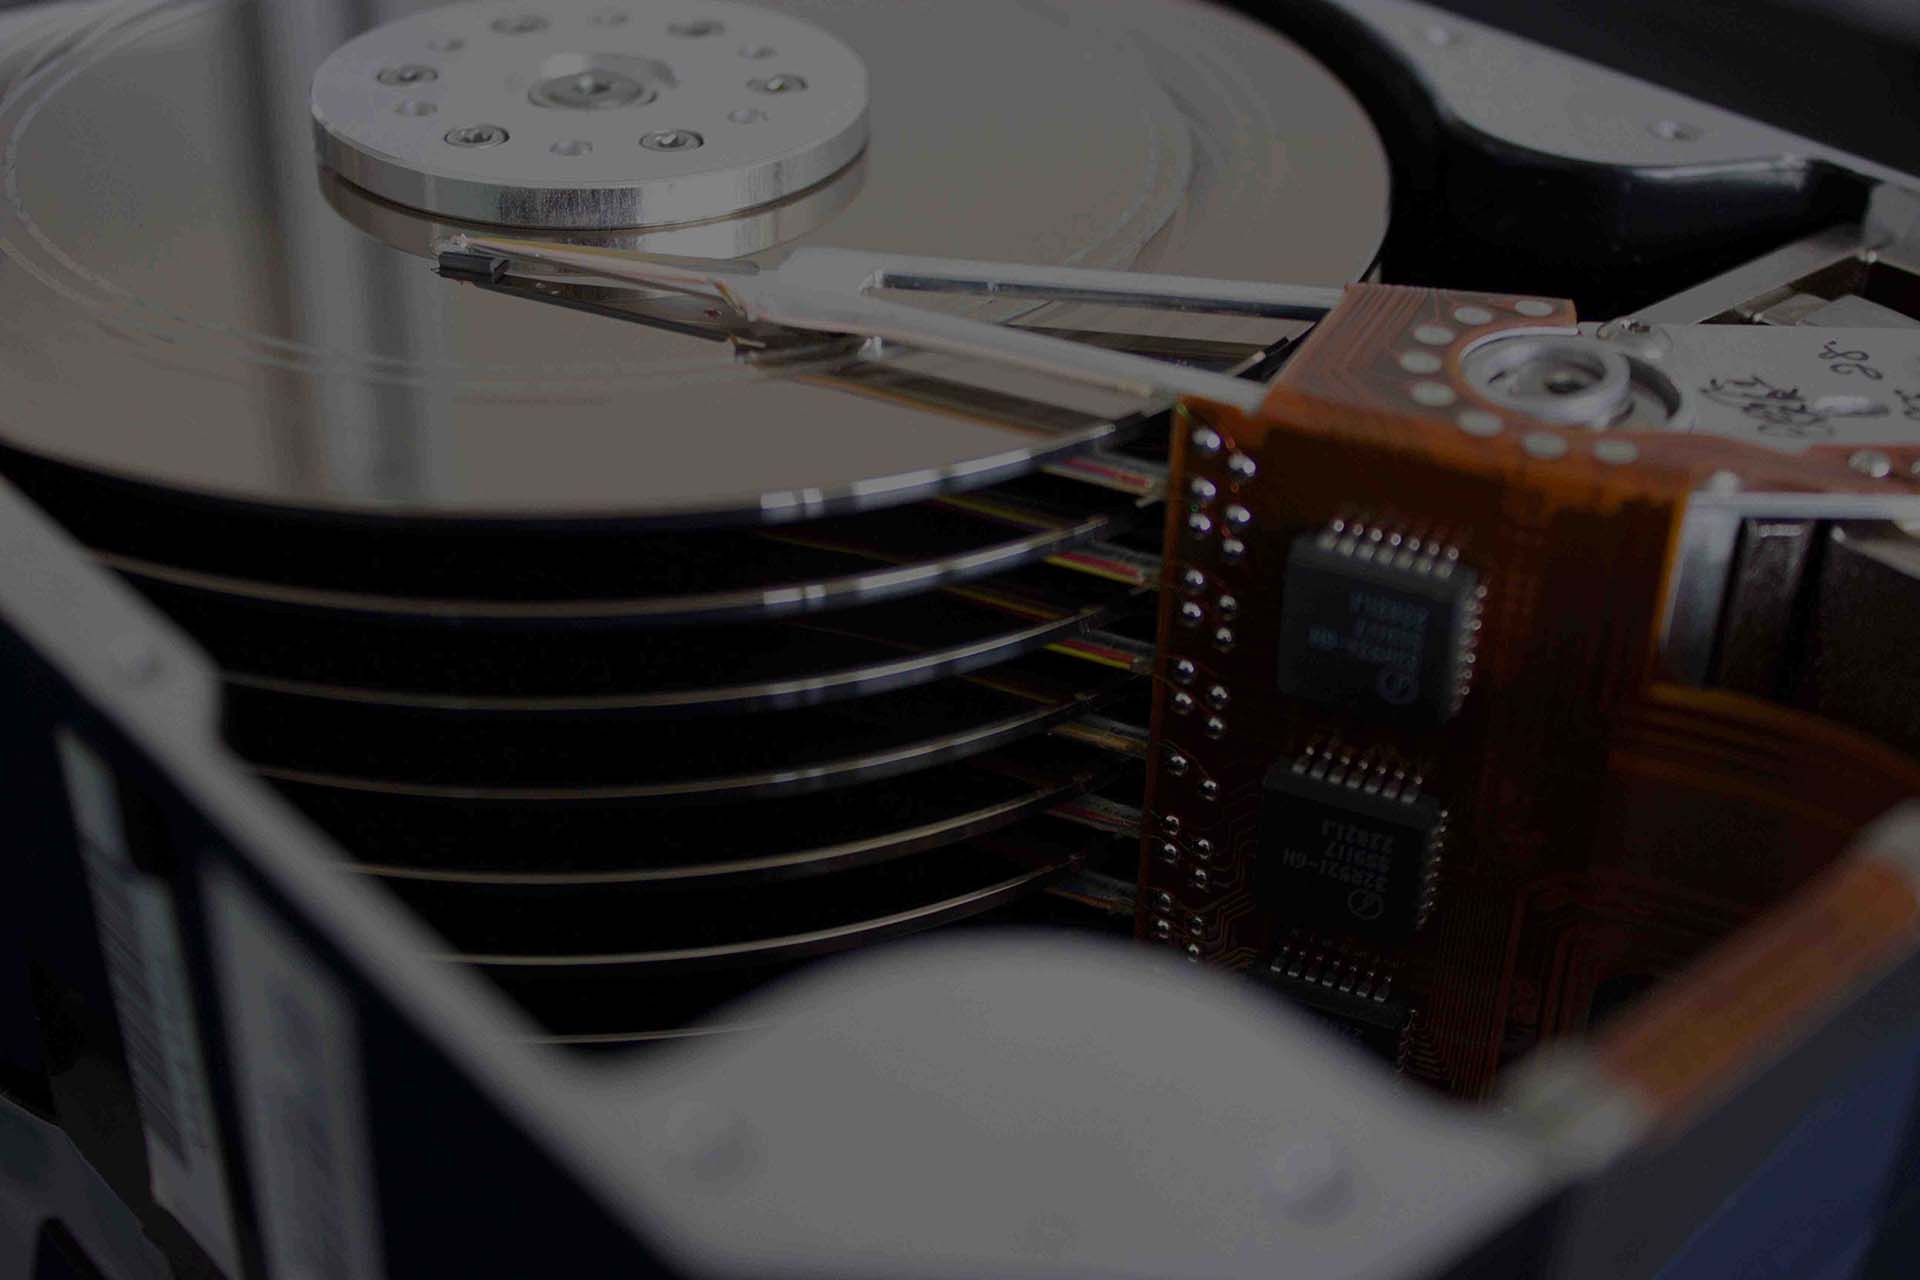 Wir retten Daten von defekten Festplatten